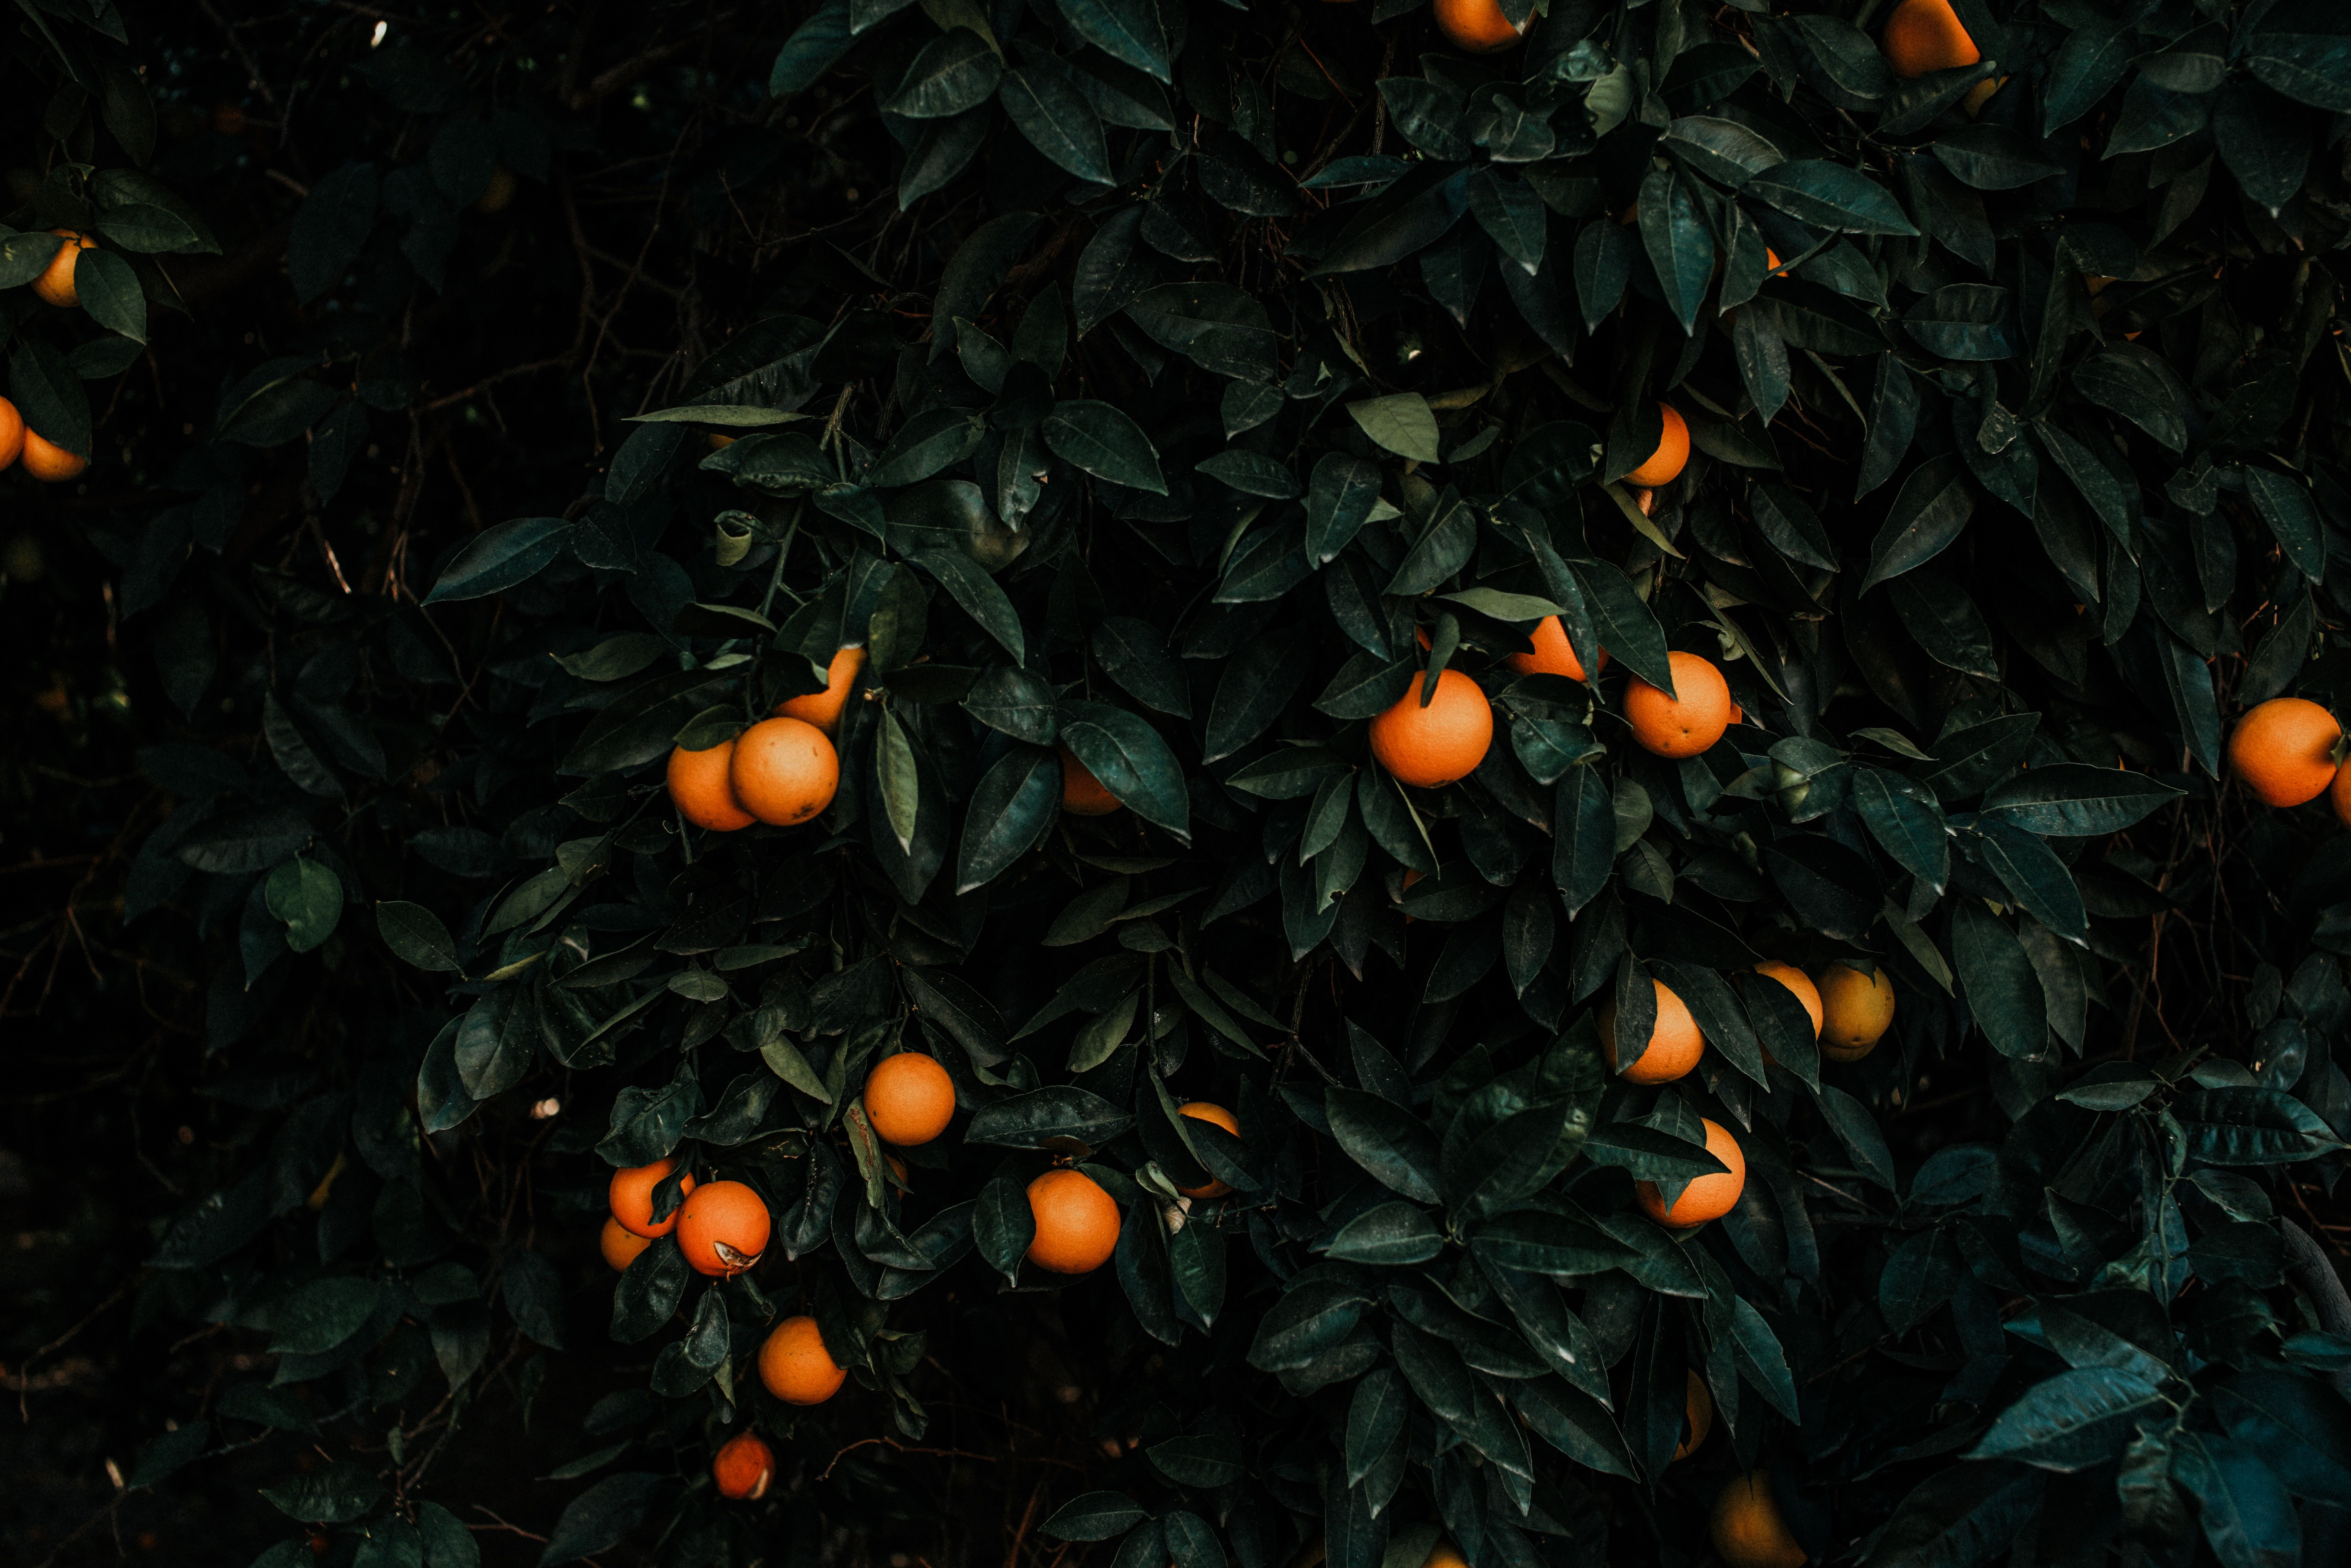 Mobile wallpaper: Plant, Tangerines, Bush, Fruit, Miscellanea, Citrus, Miscellaneous, 120547 download the picture for free